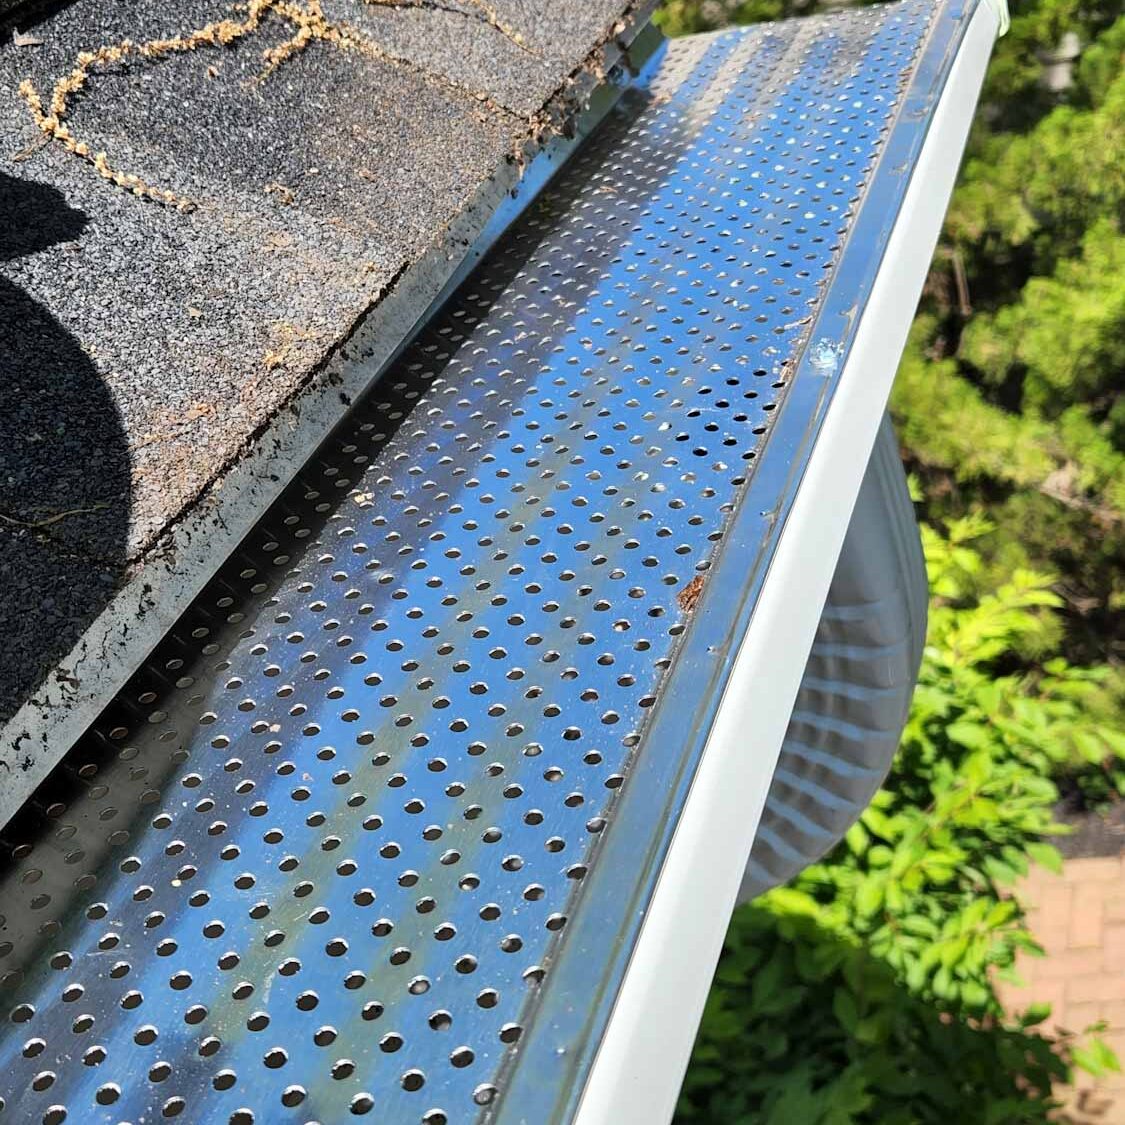 Perforated aluminum gutter guard